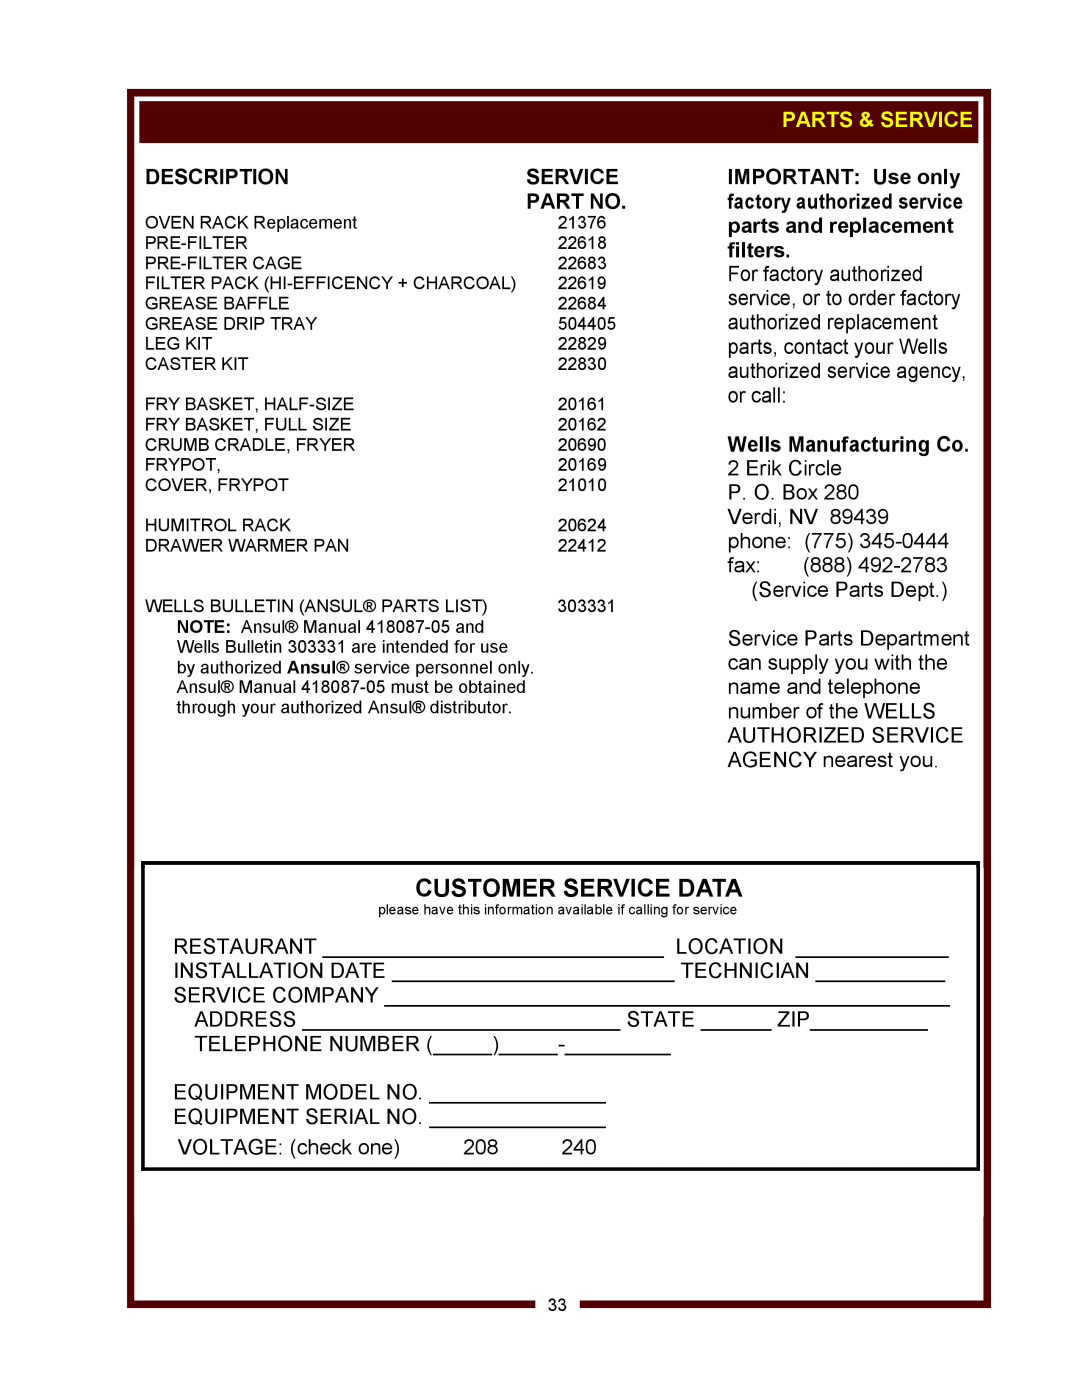 Wells WV-FGRW operation manual Customer Service Data, Description, Parts & Service, Wells Manufacturing Co 